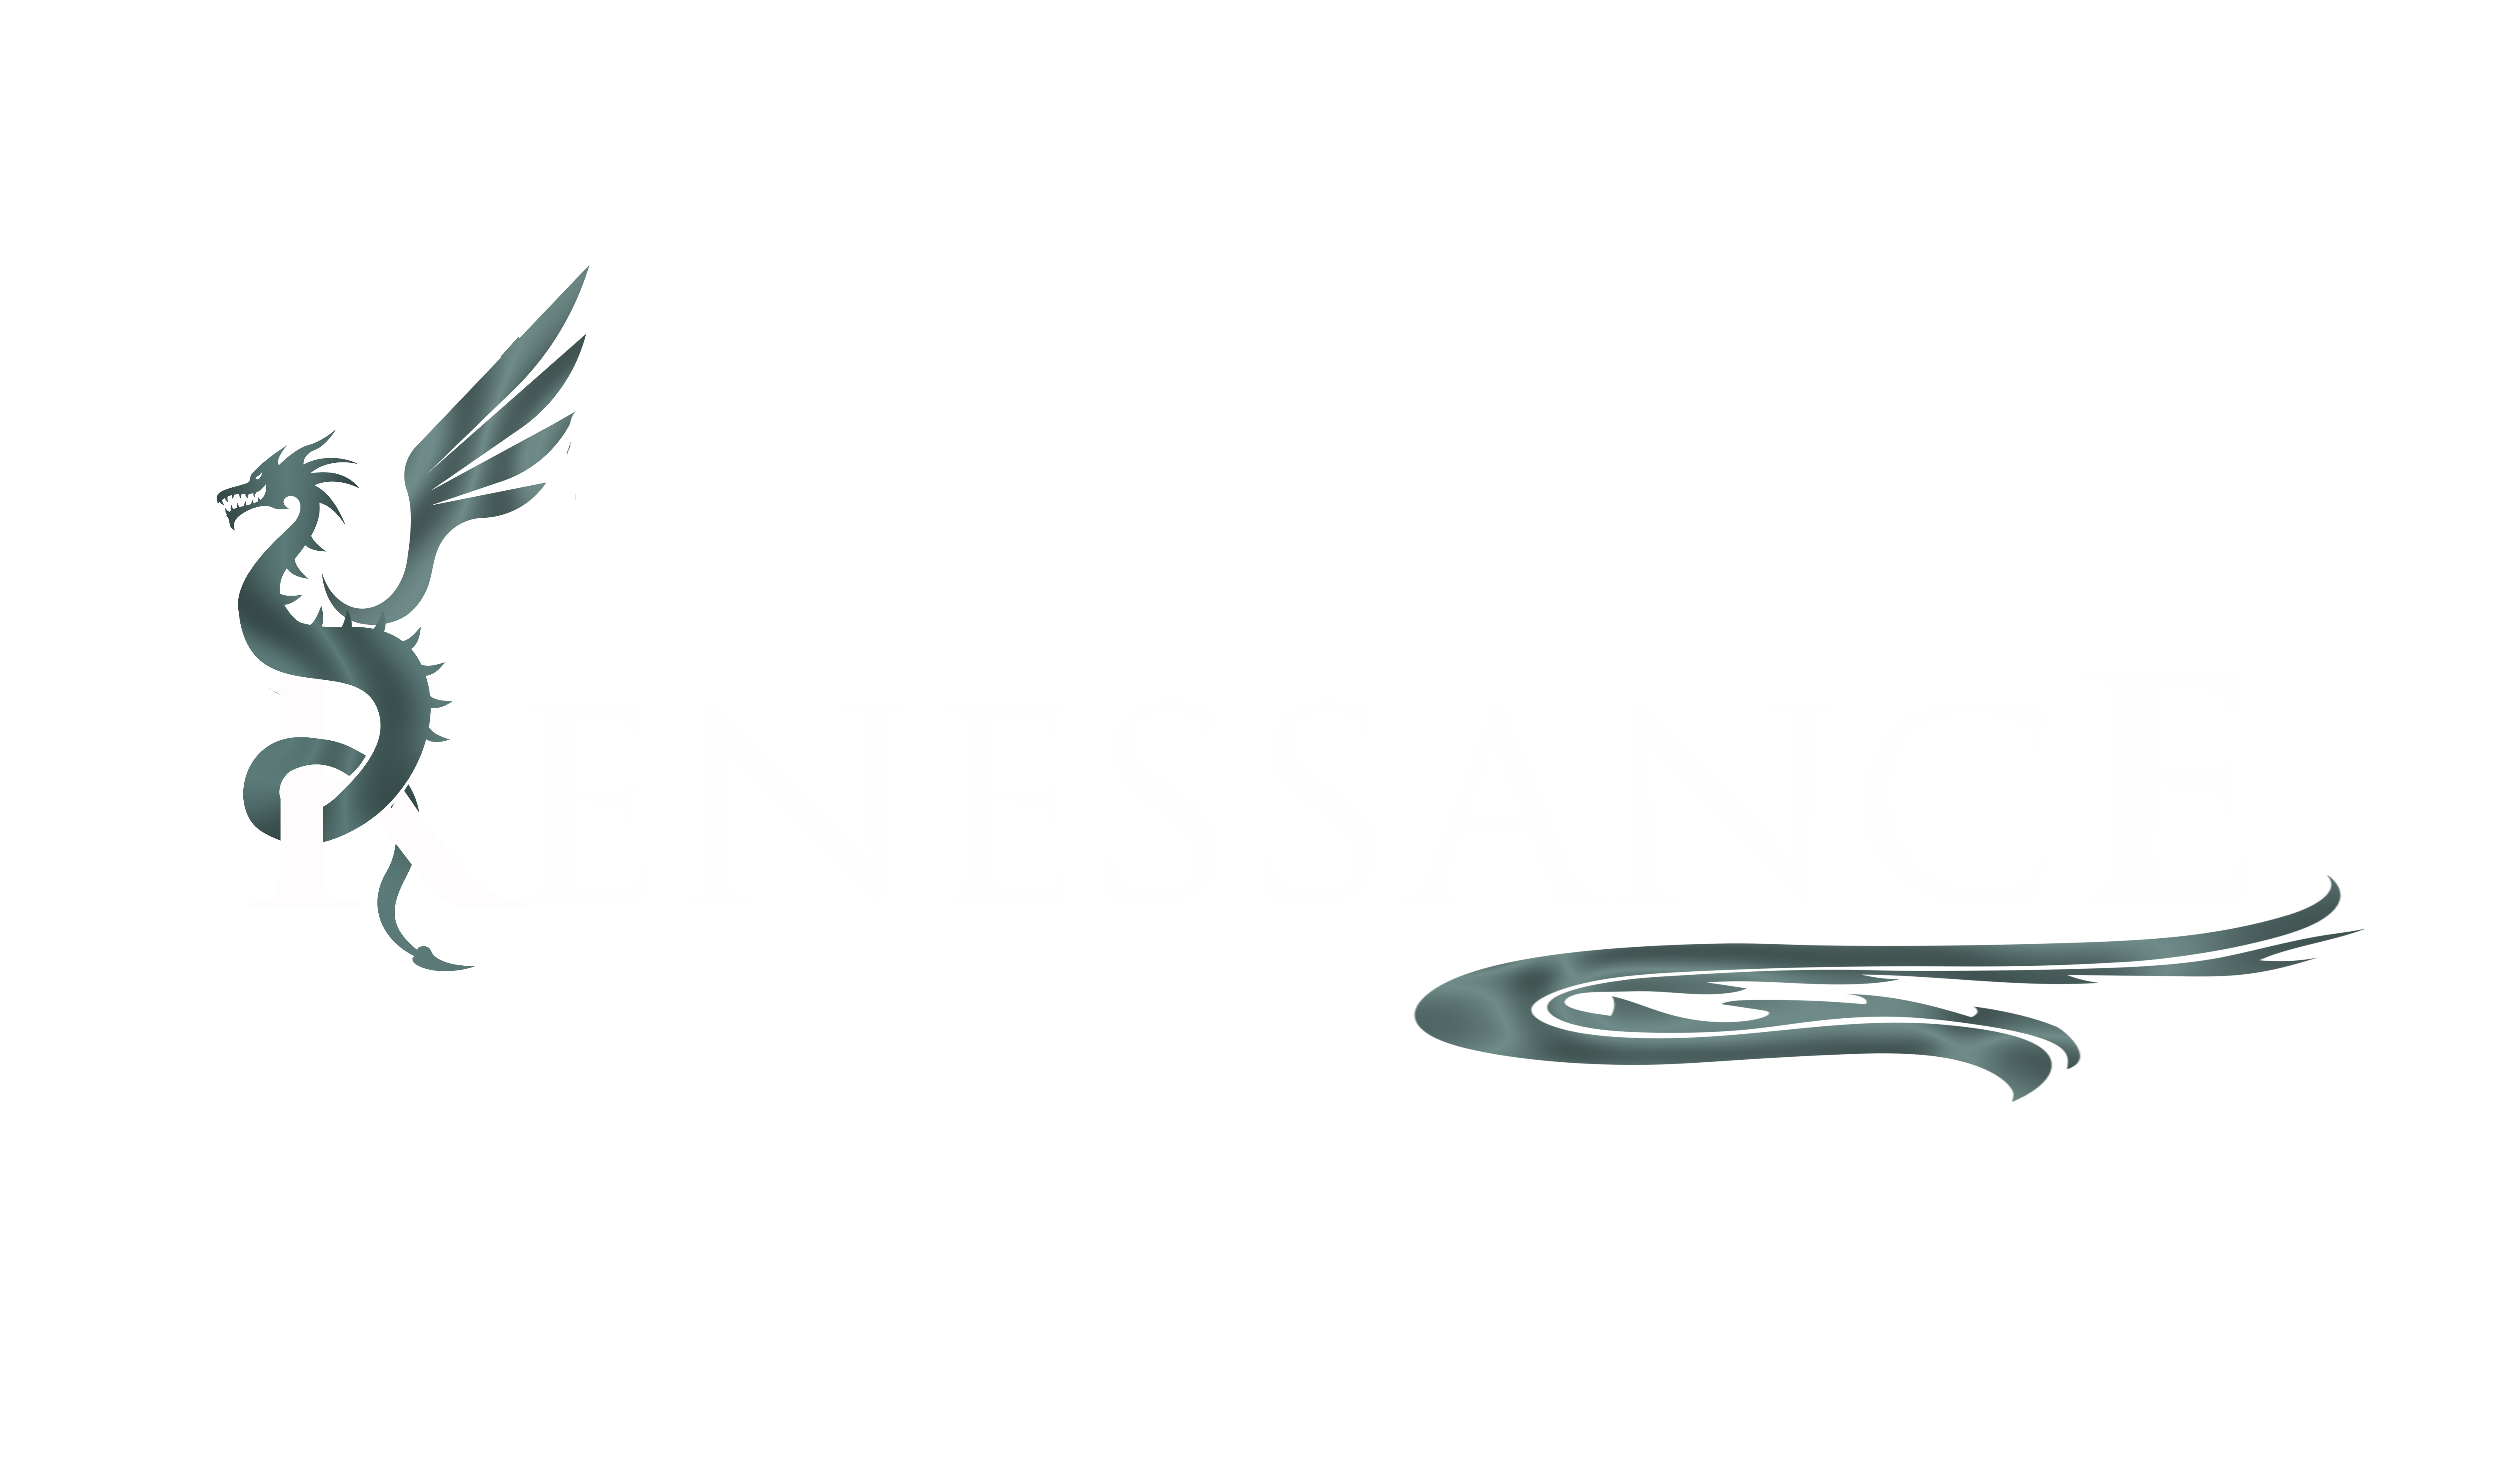 Renessance Logo